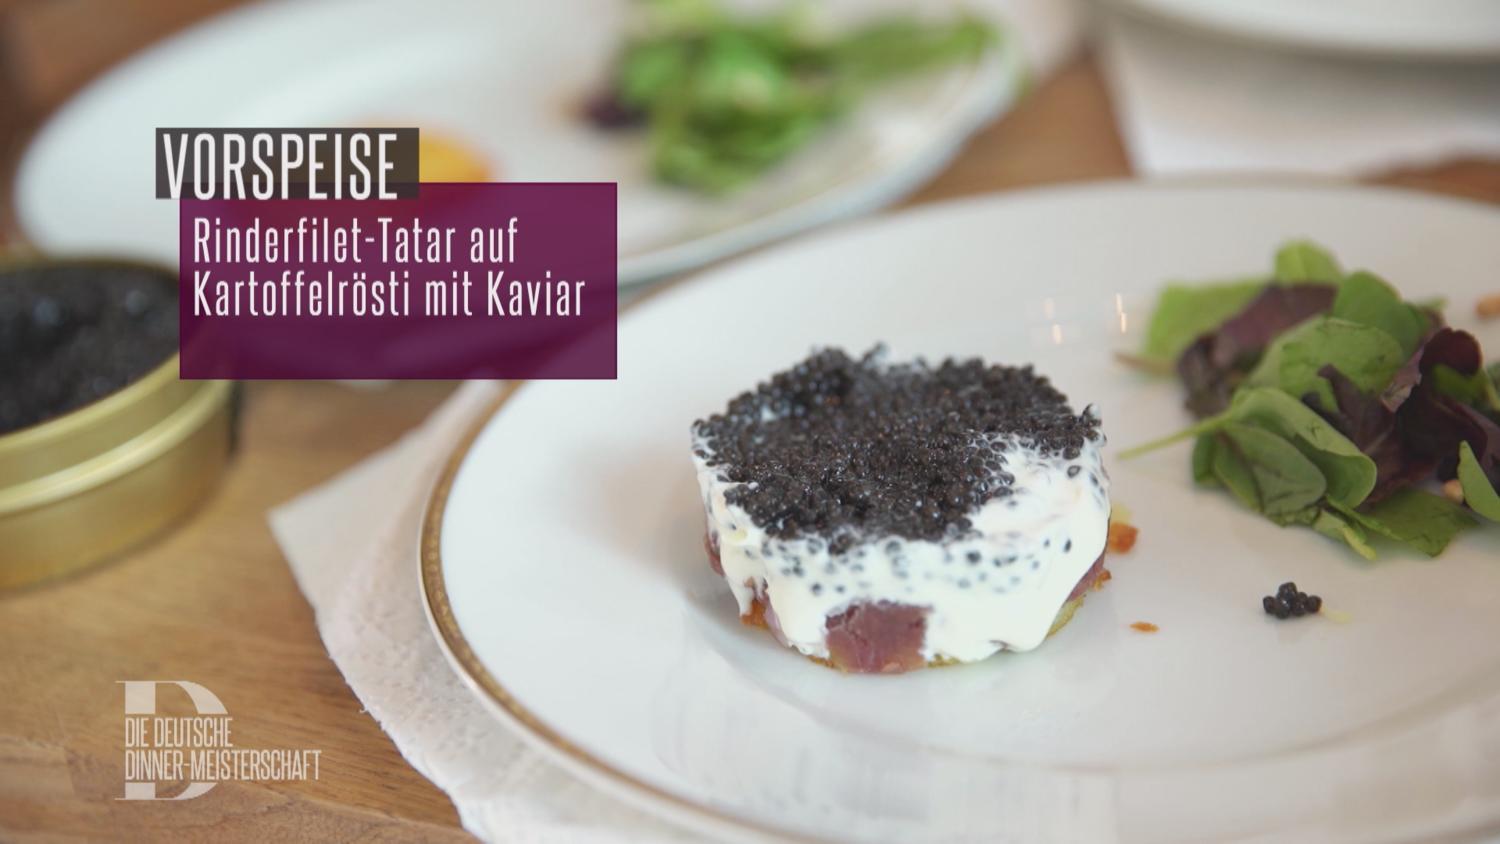 Rindertatar auf Kartoffelrösti mit Kaviar vom Stöhr - Rezept - kochbar.de